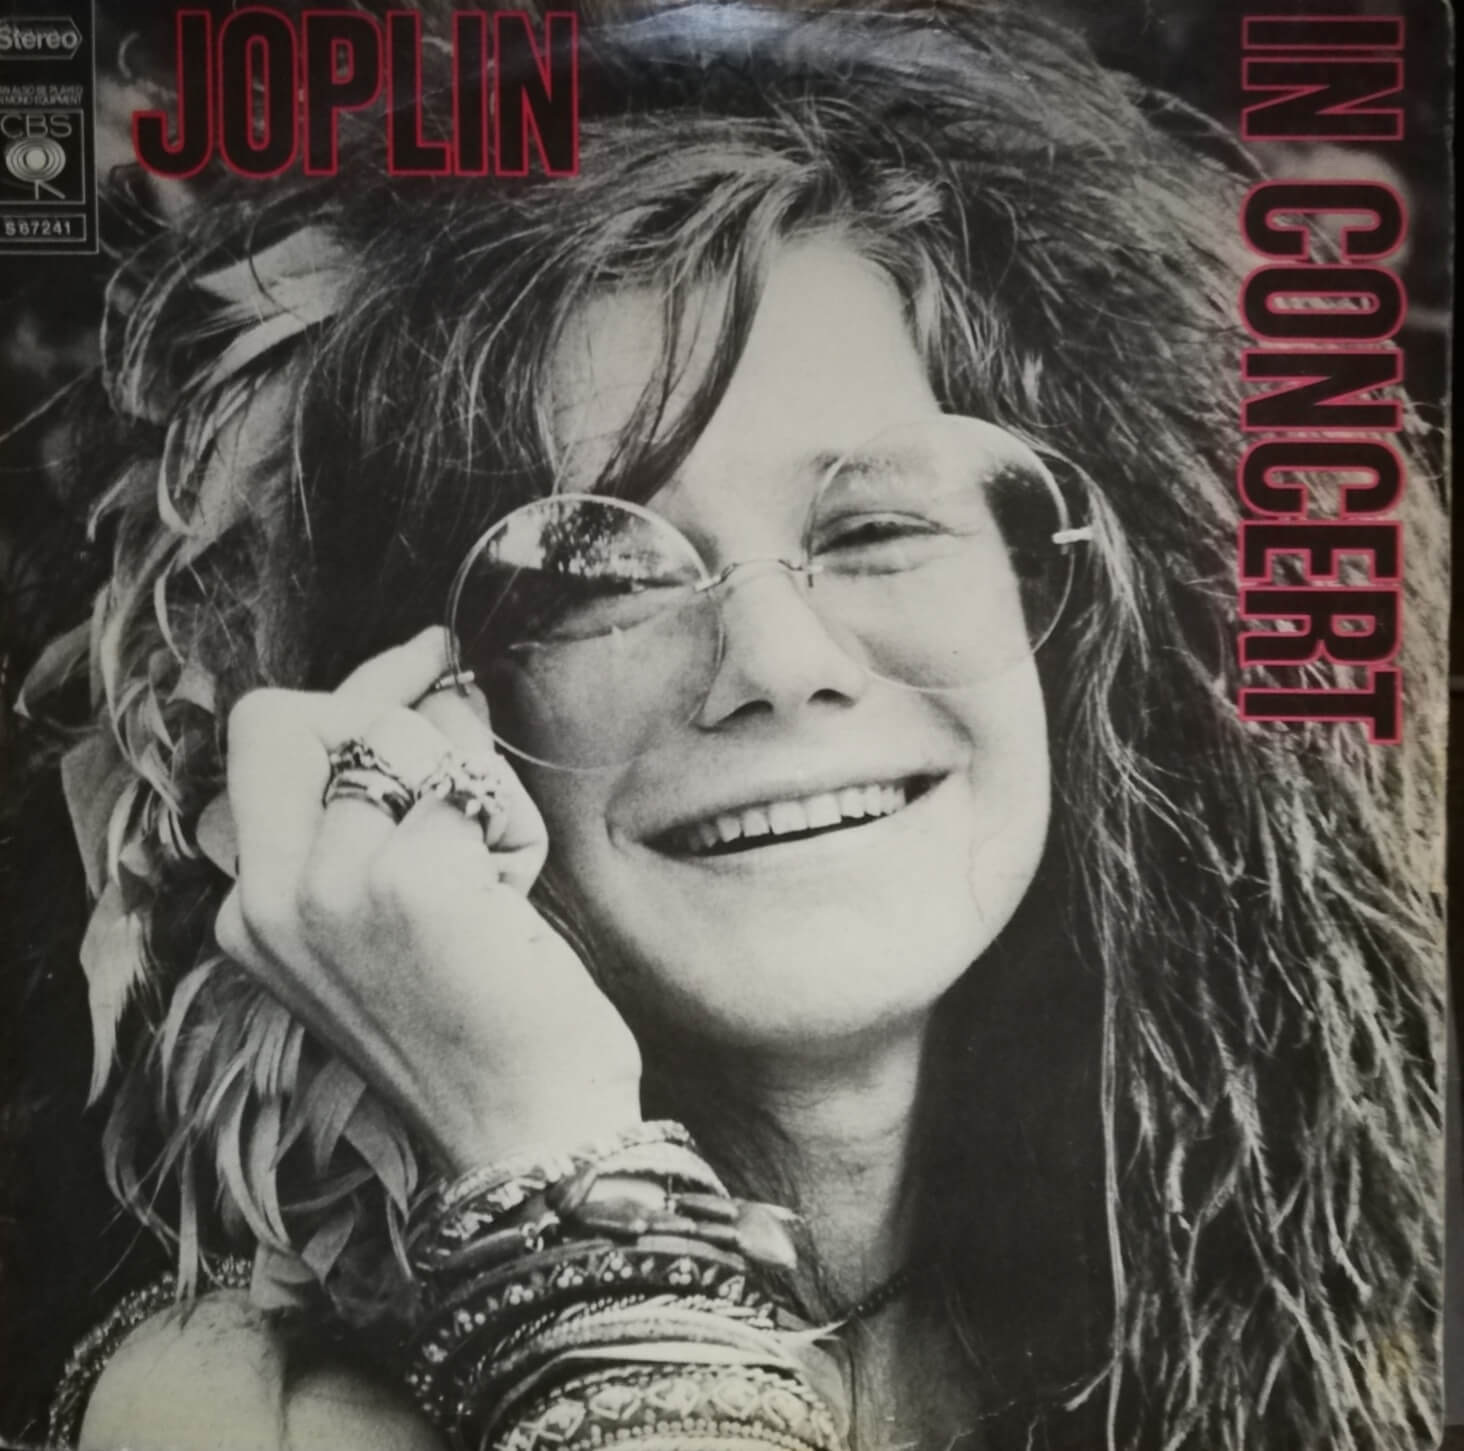 Okładka płyty winylowej artysty Janis Joplin o tytule Joplin in Concert